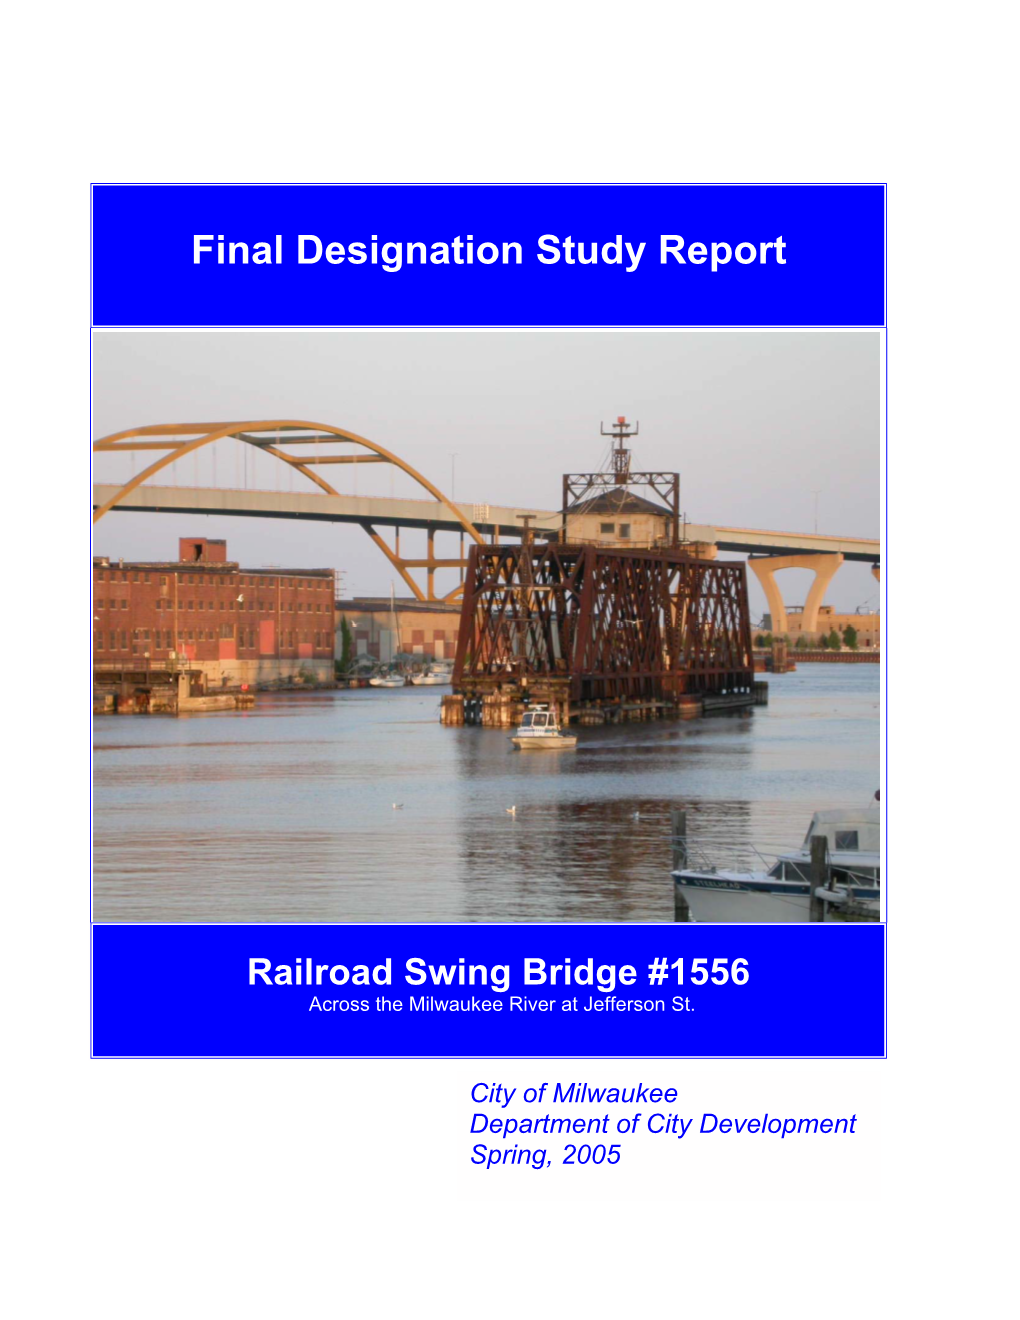 Railroad Swing Bridge #1556 Across the Milwaukee River at Jefferson St